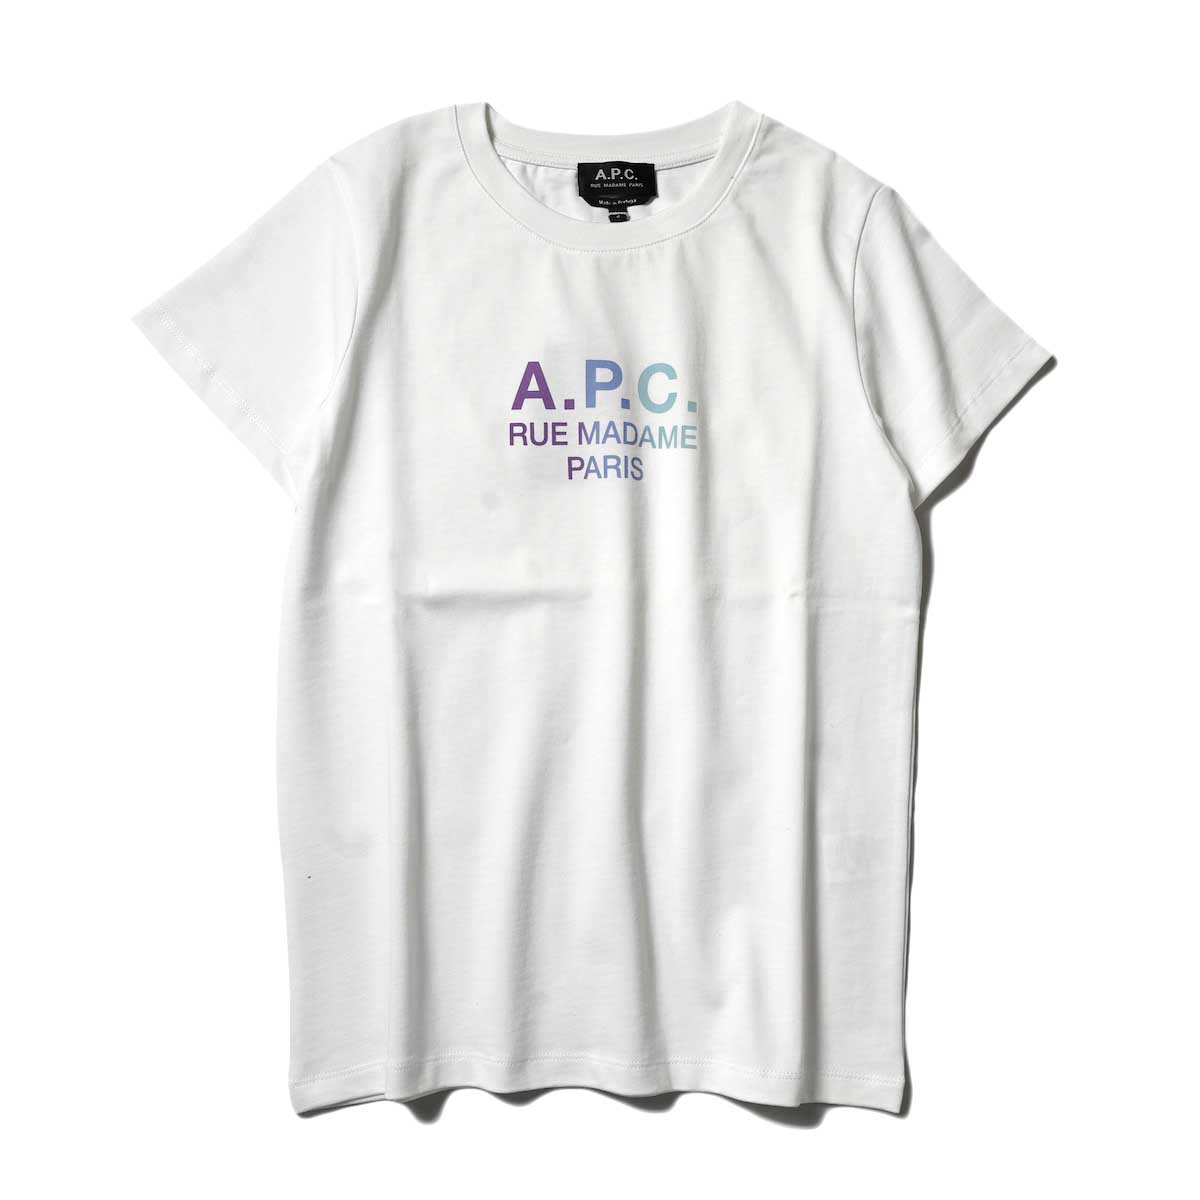 A.P.C. / Jenny Ete Tシャツ (White)